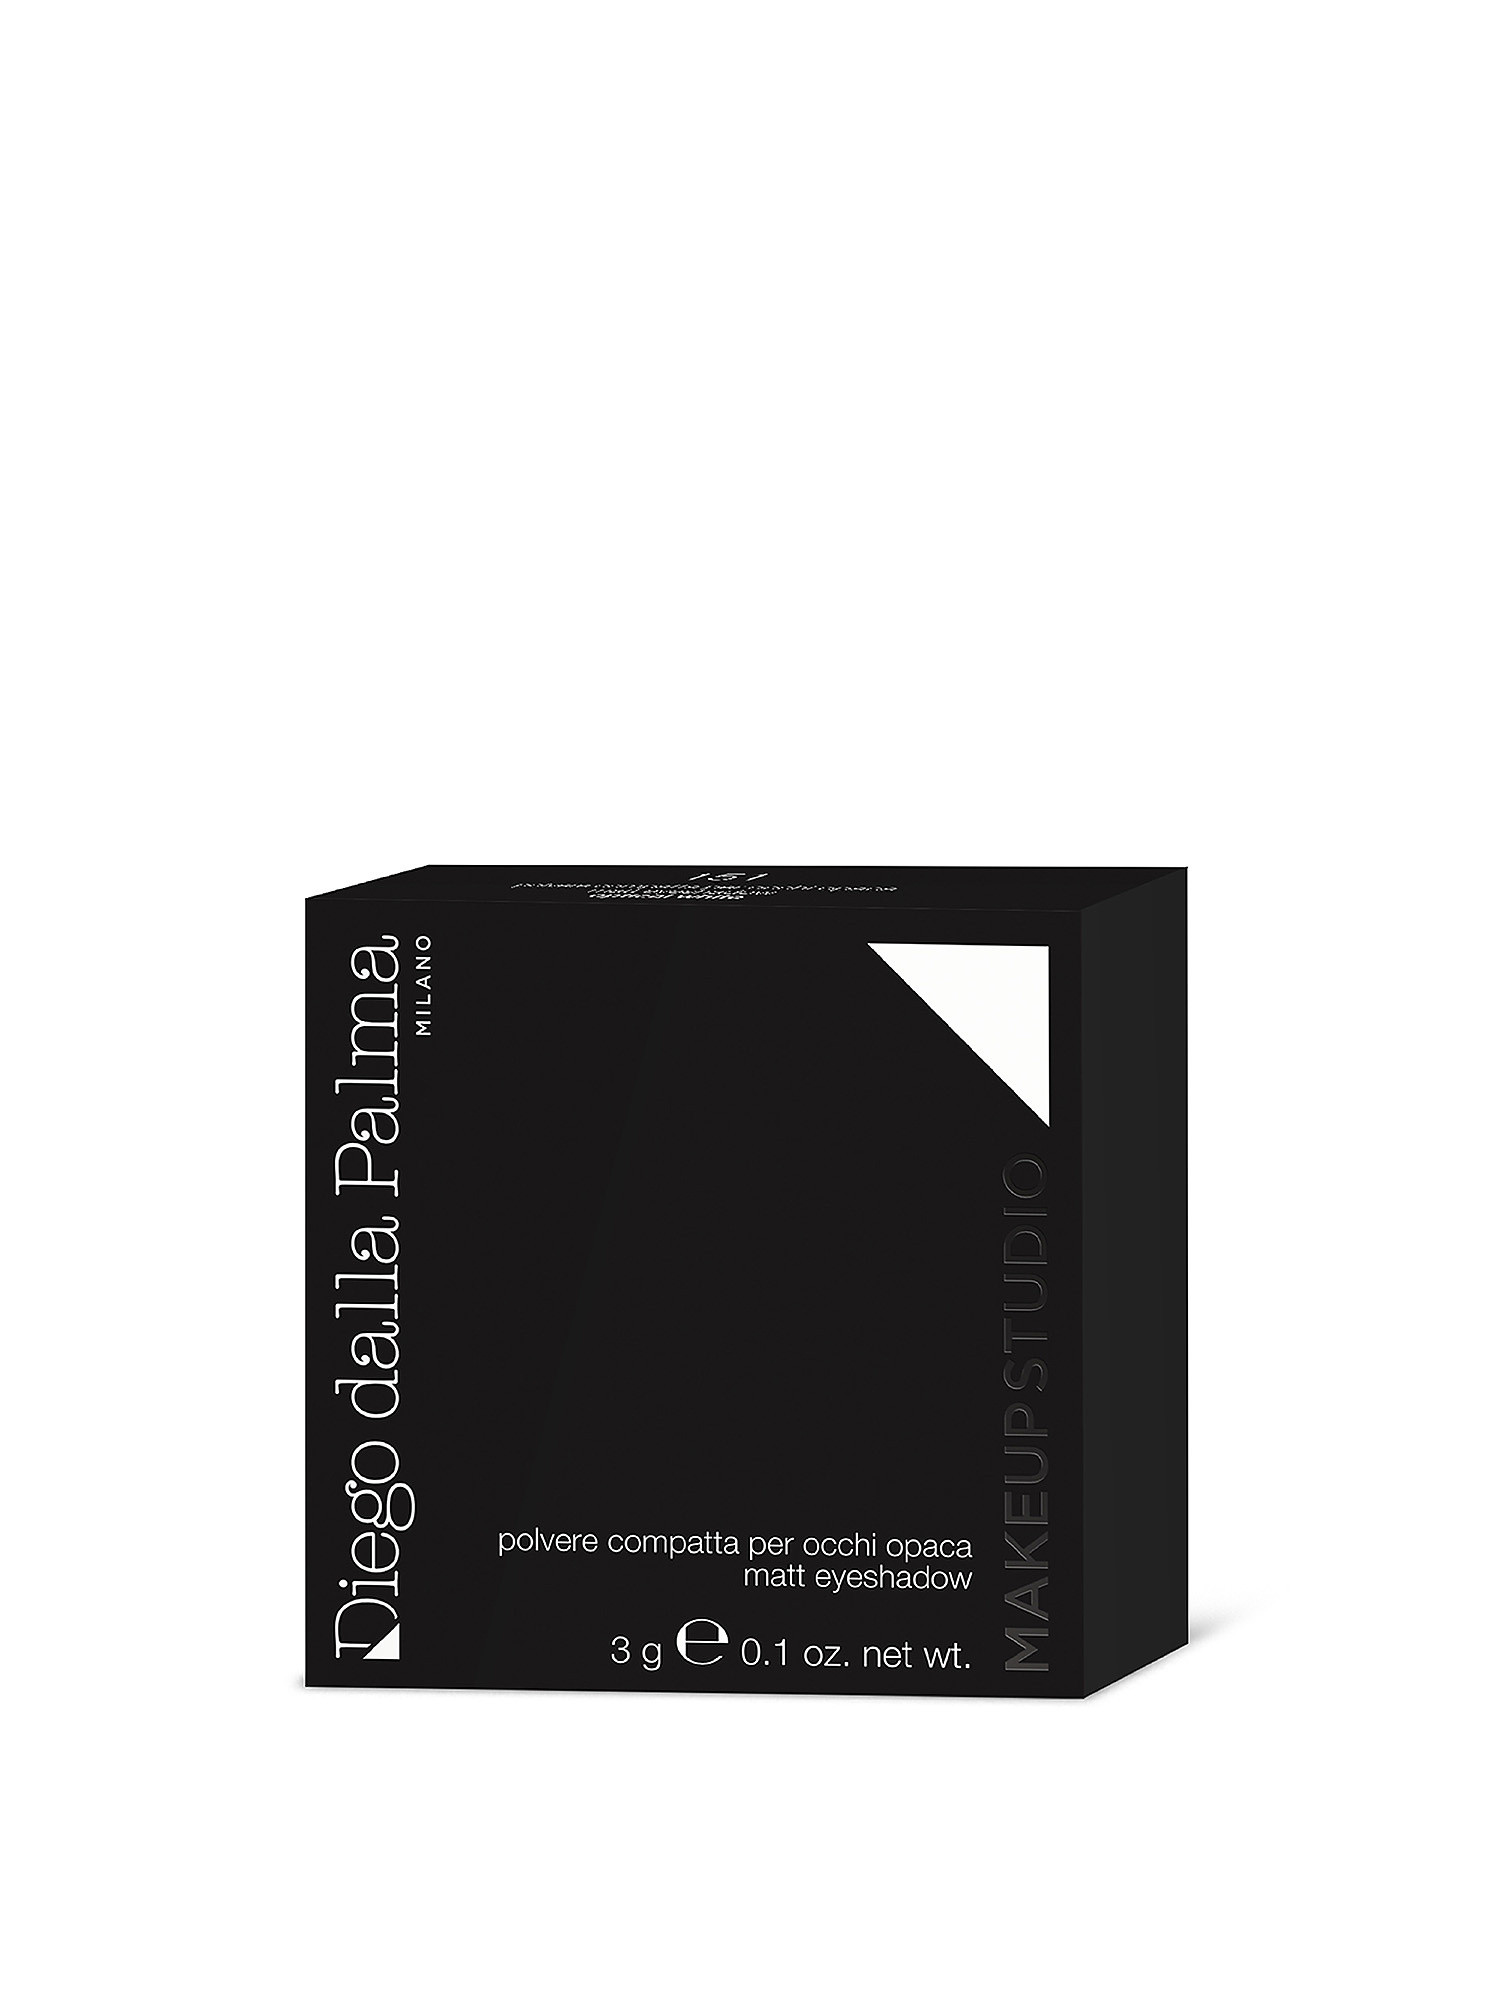 Makeupstudio Polvere Compatta Per Occhi Opaca - 151 optical white, Bianco, large image number 2